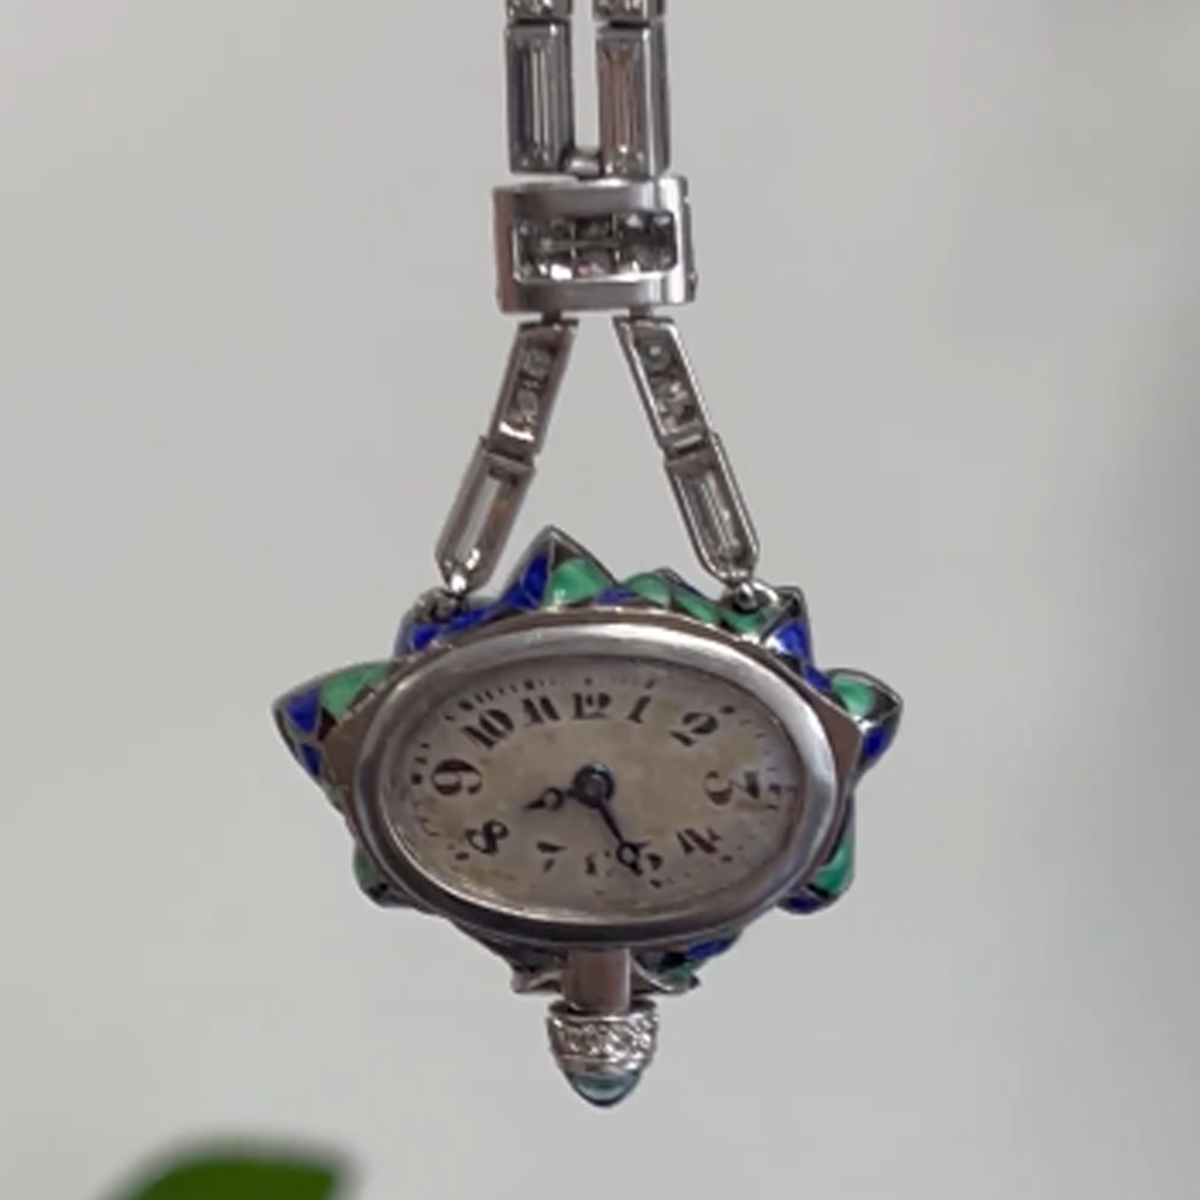 Mauboussin Art Deco Platinum Diamond & Enamel Lapel Watch Brooch close-up details of watch face